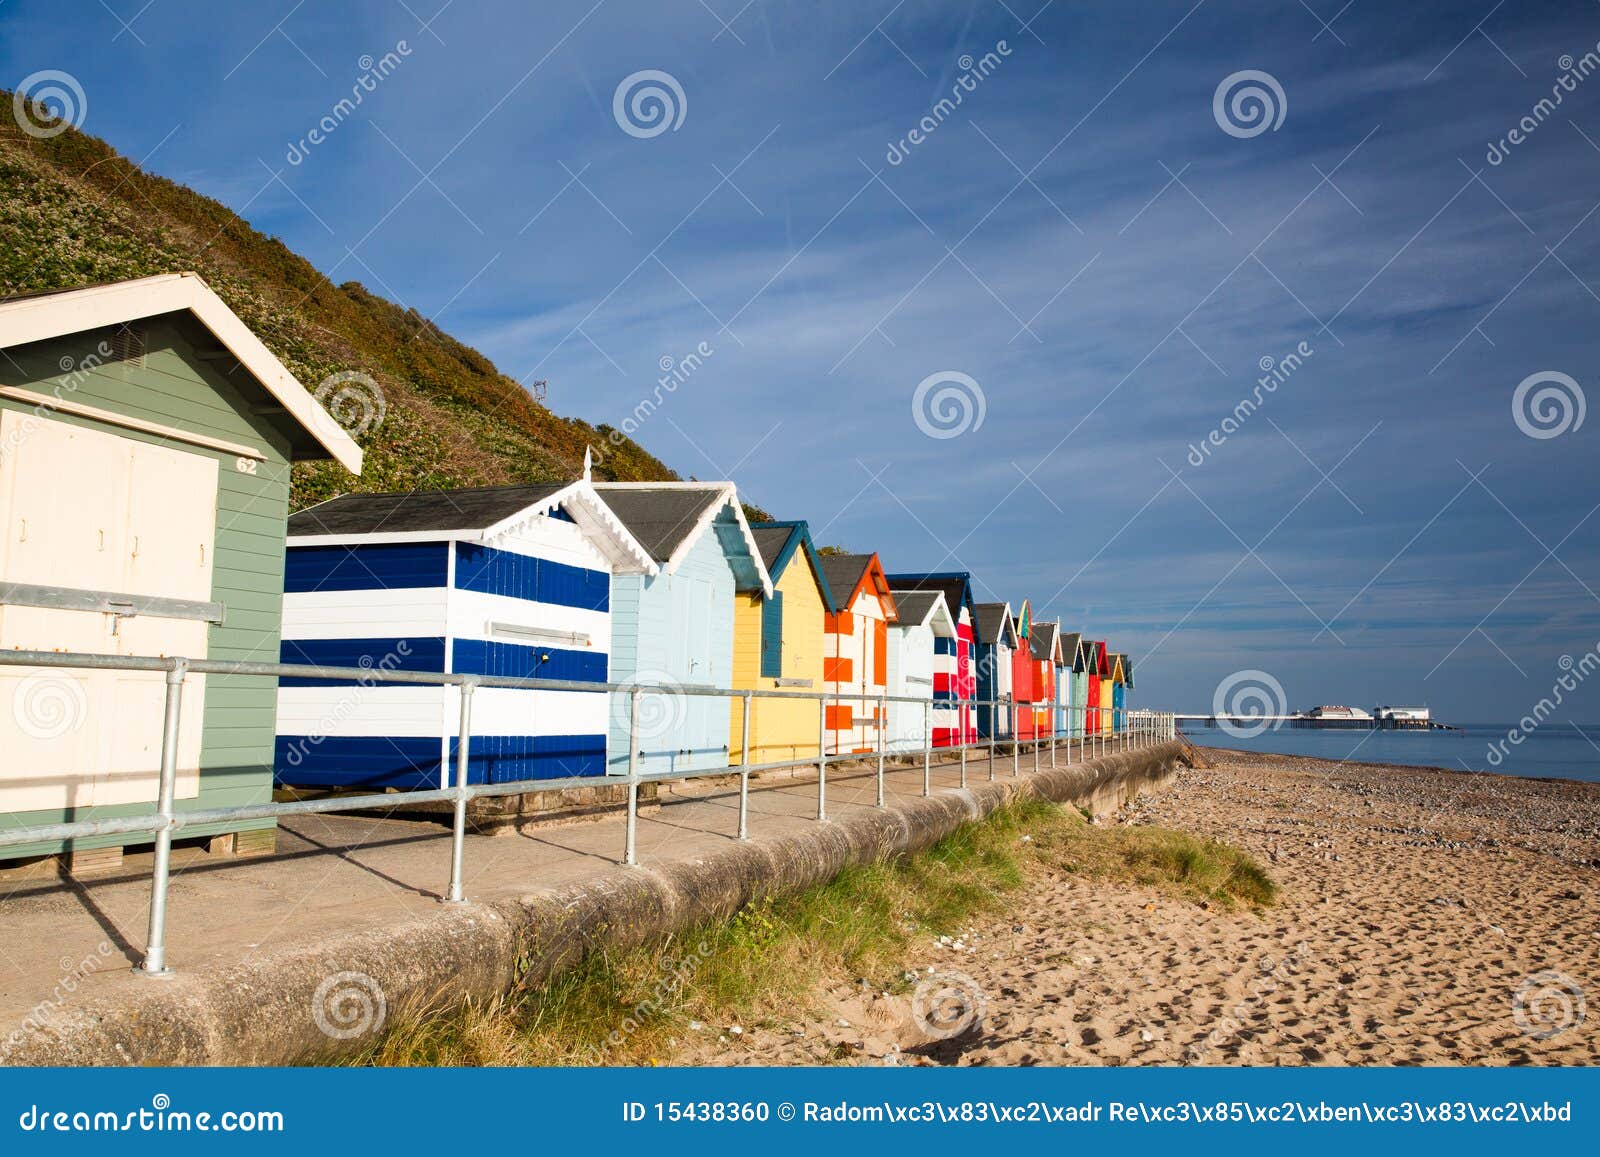 Beach huts othe Cromer beach in Great Britain.